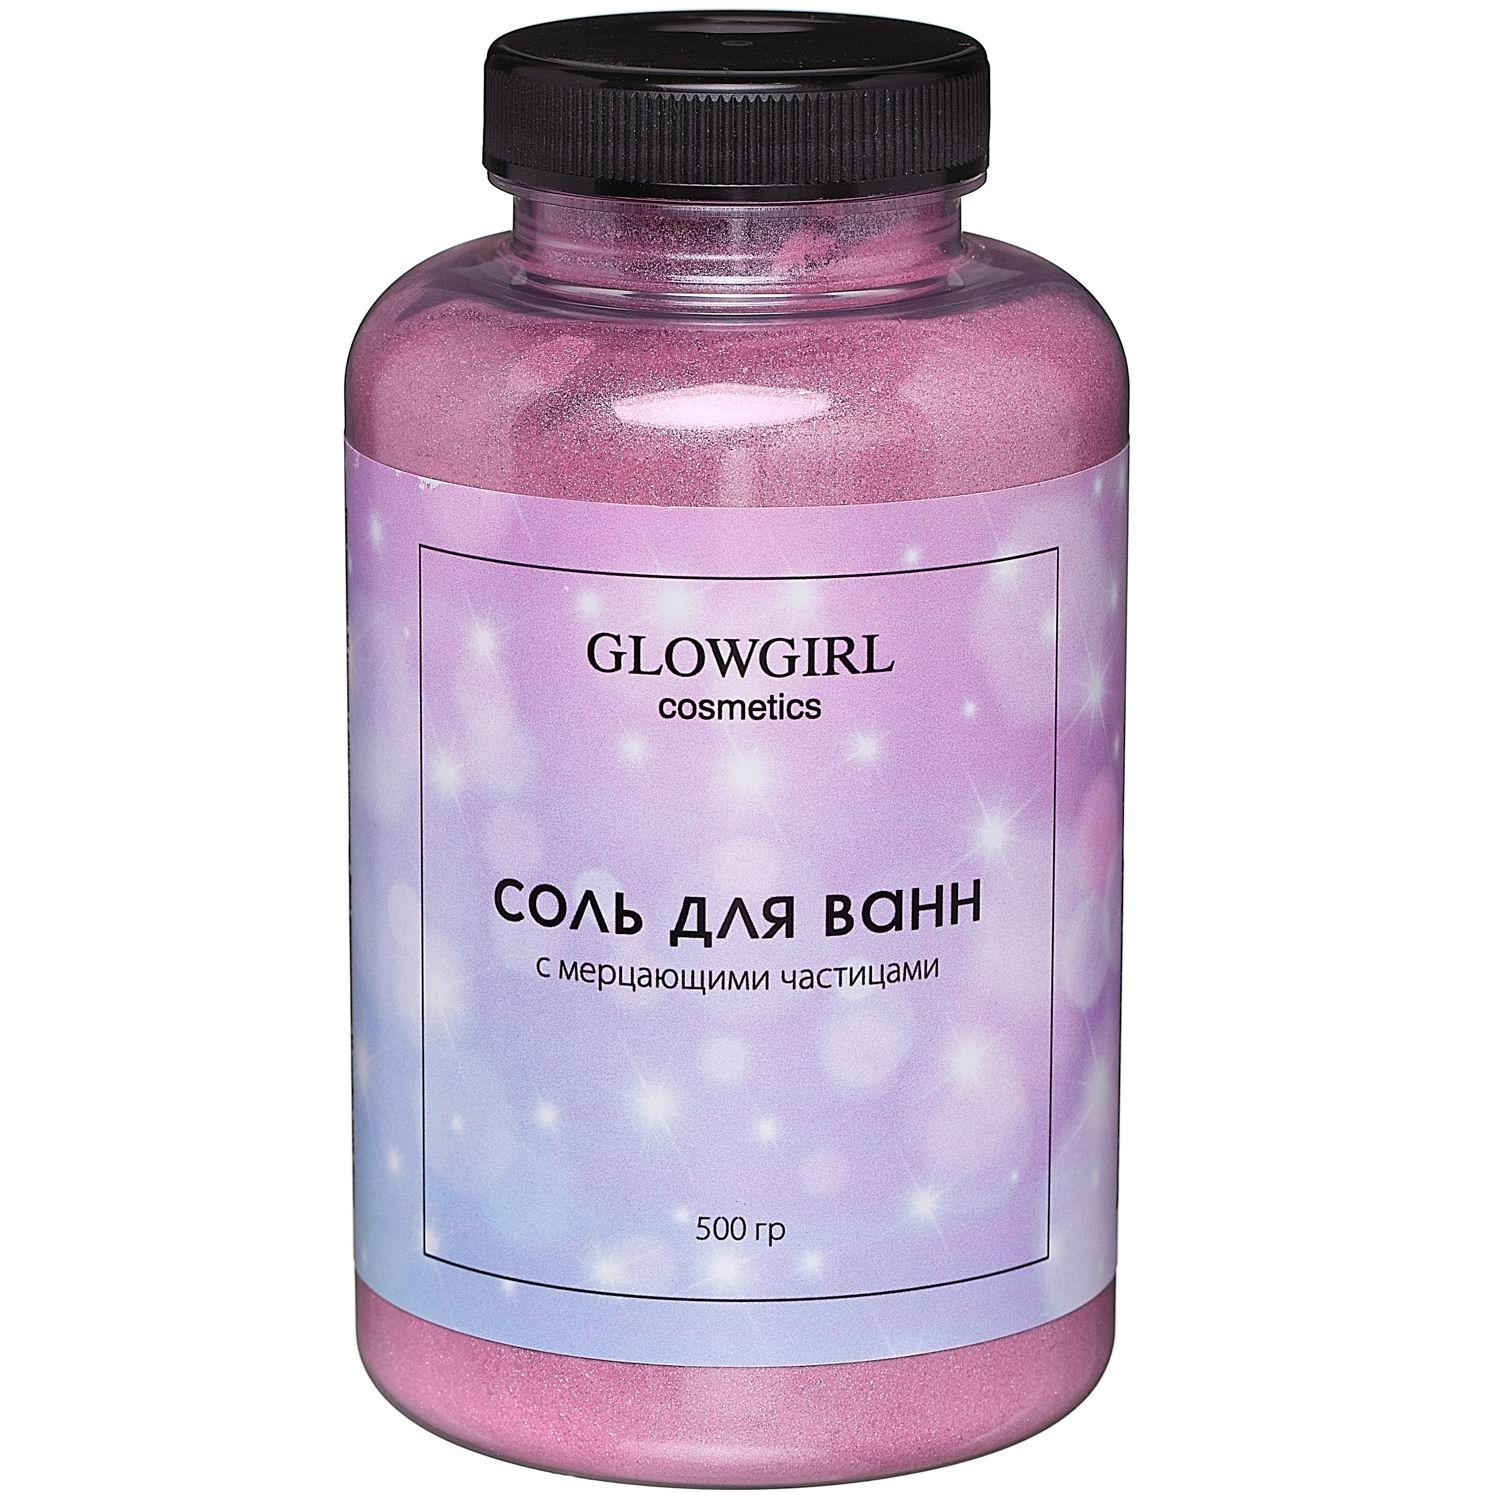 Соль для ванн Glowgirl розовый гранат 500г лак для ногтей тон 706 яркий гранат 11 г